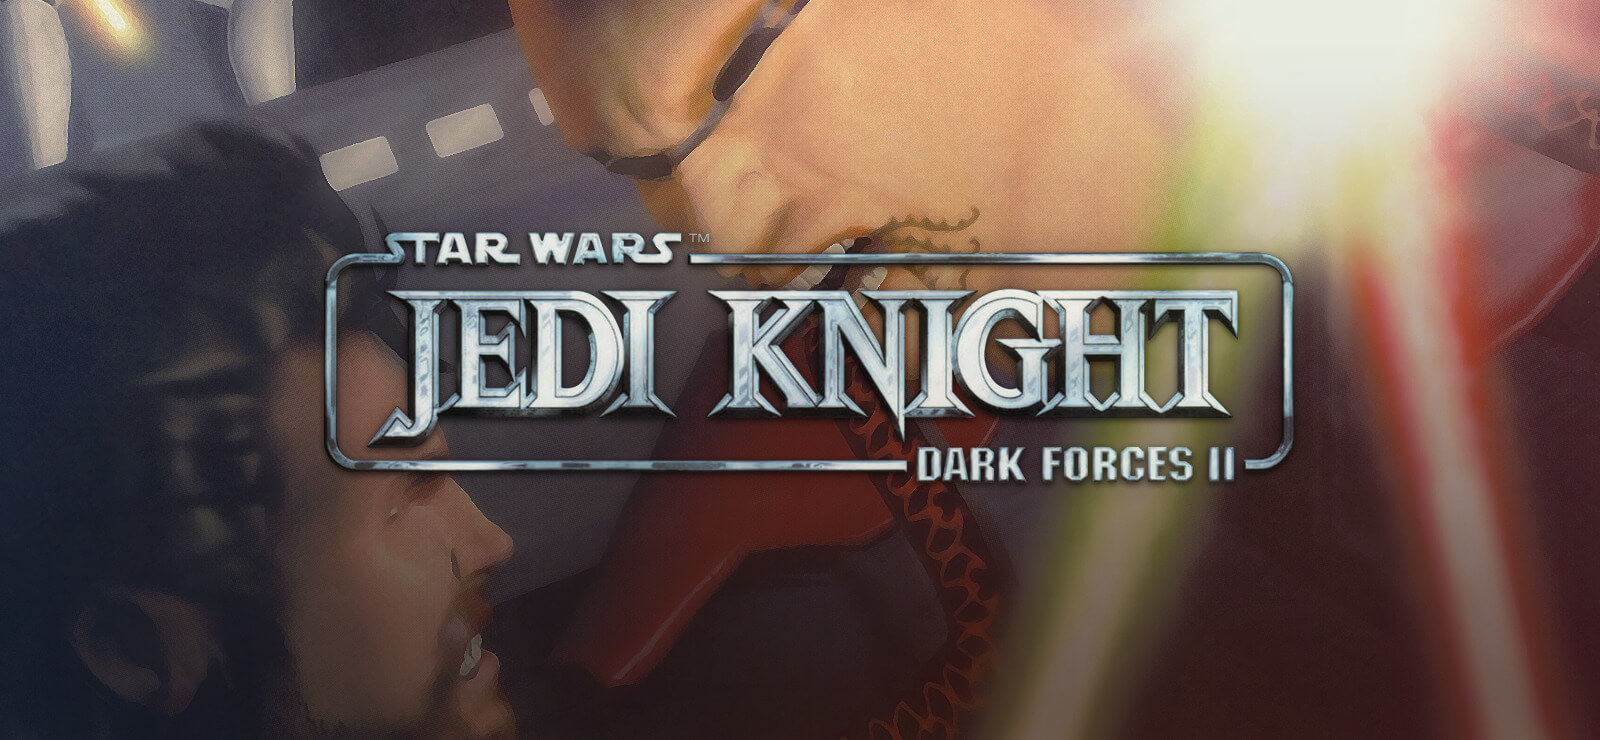 Star Wars Jedi Knight Remastered 2.0 Mod is beschikbaar om te downloaden